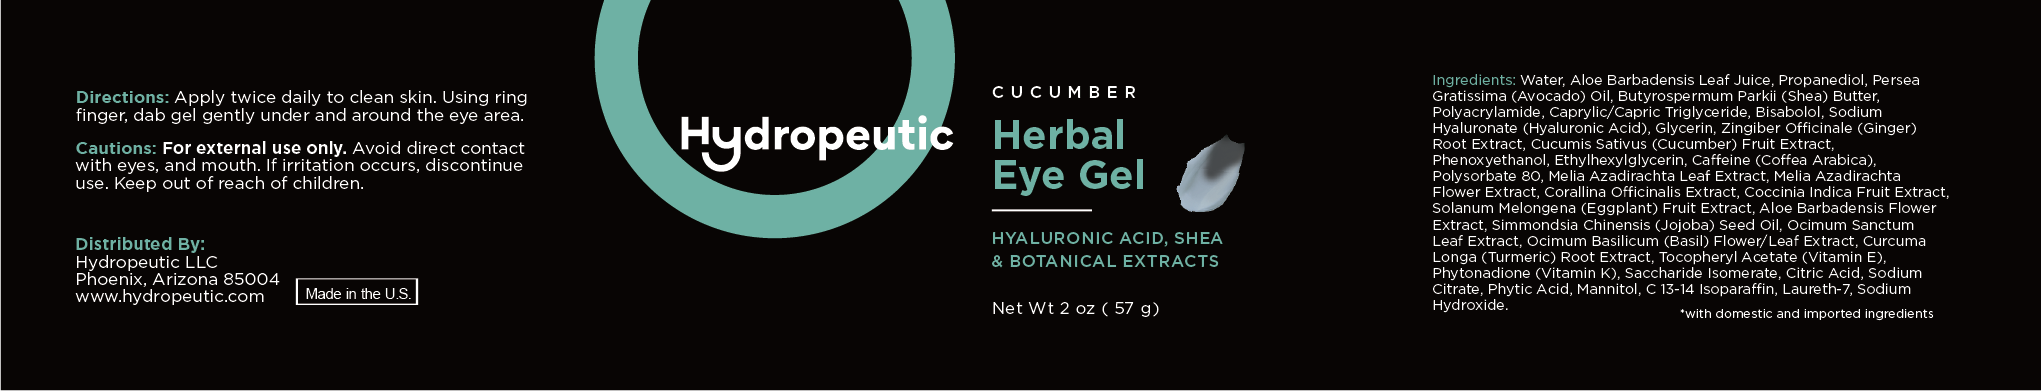 Cucumber Herbal Eye Gel